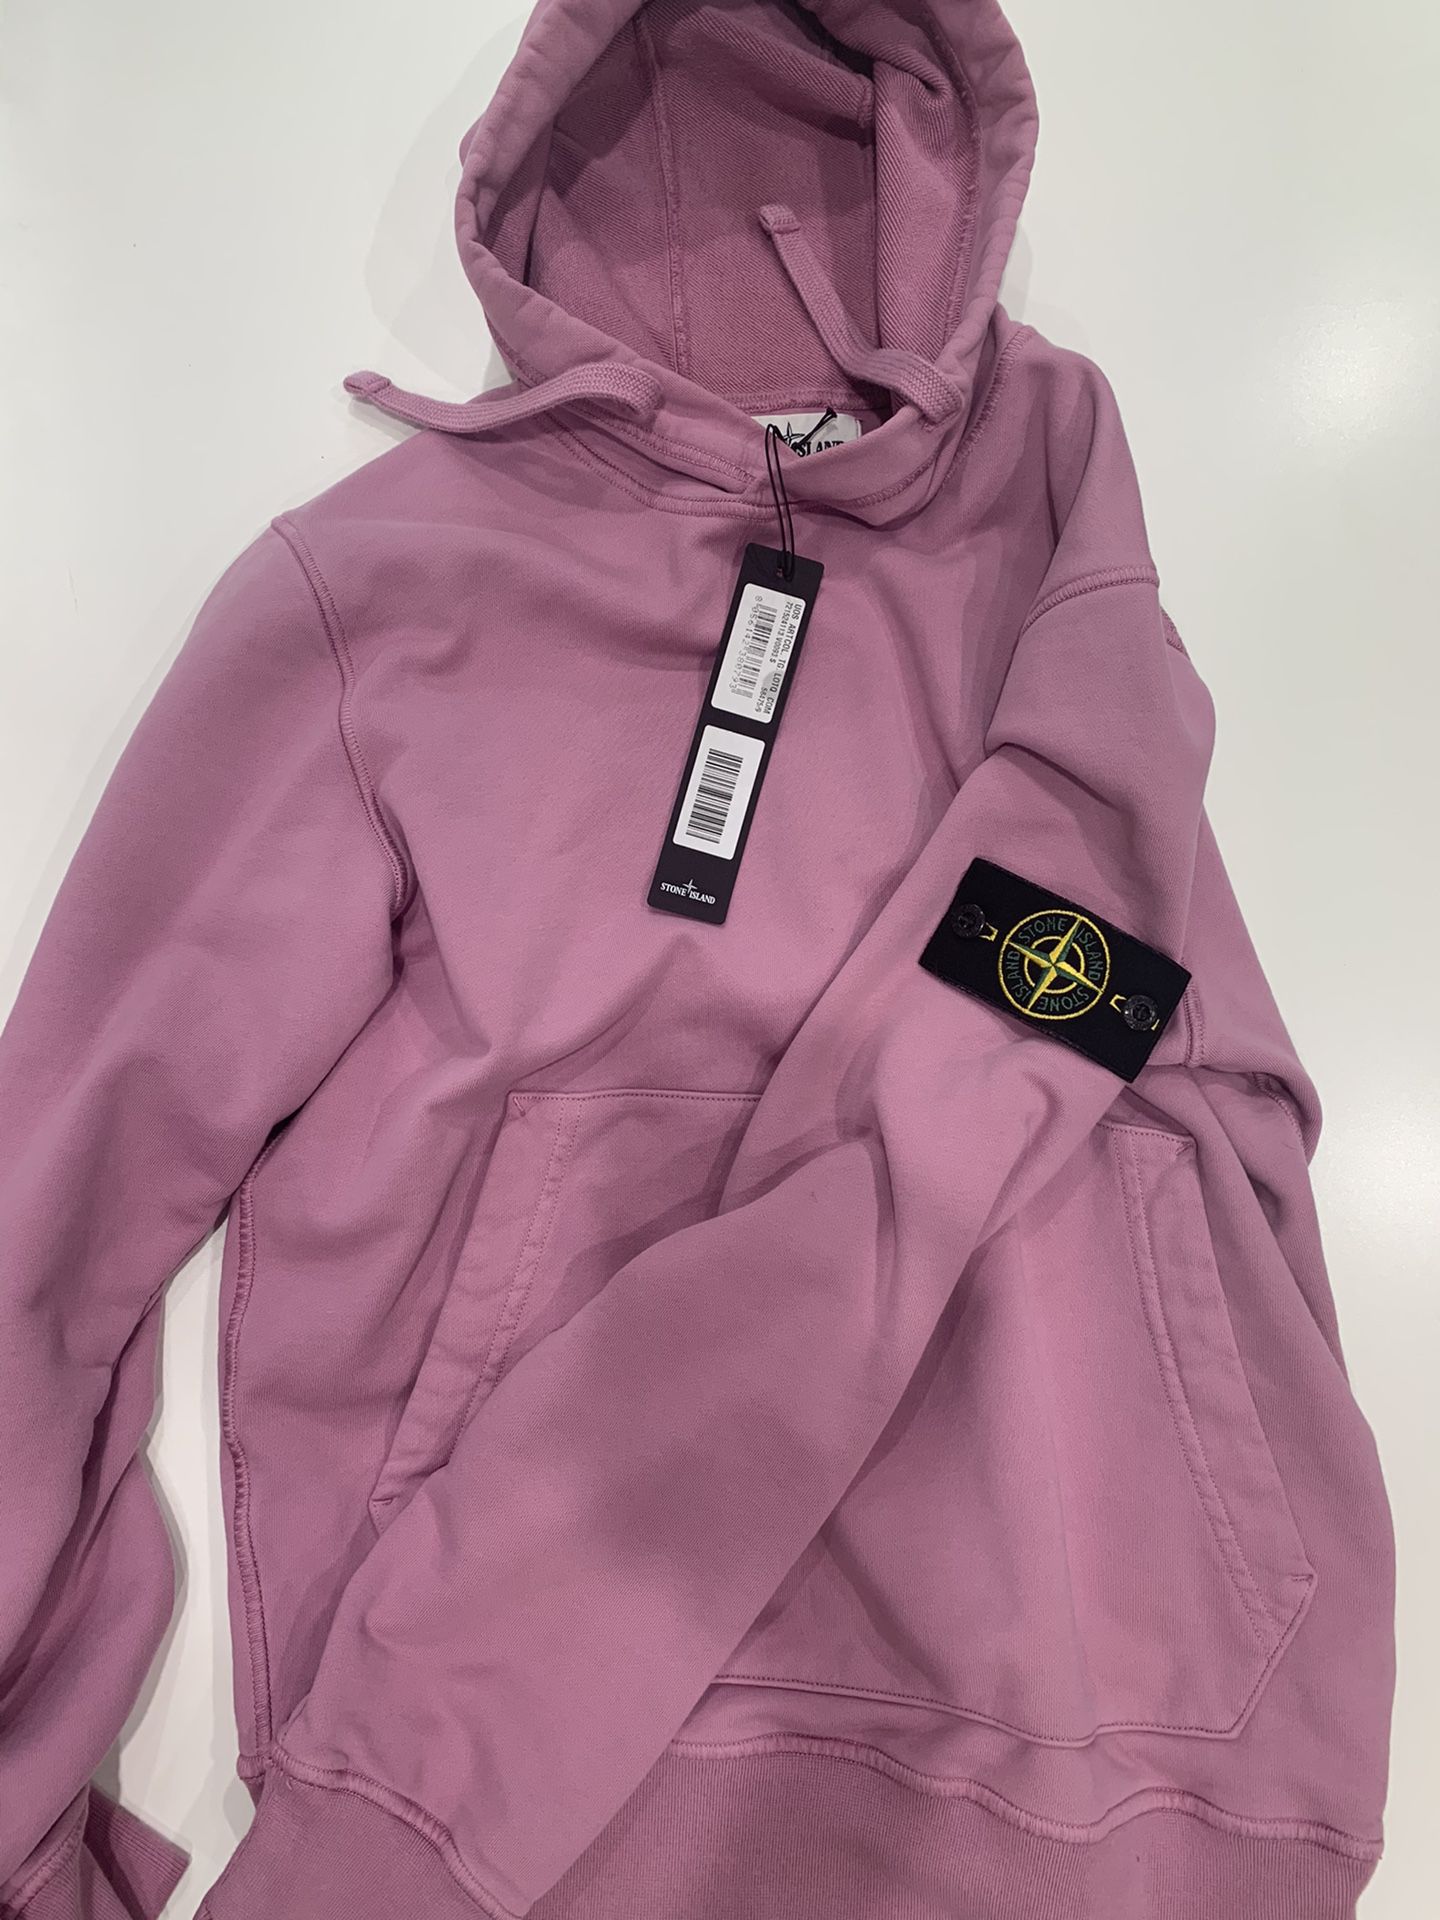 Stone island hoodie pink